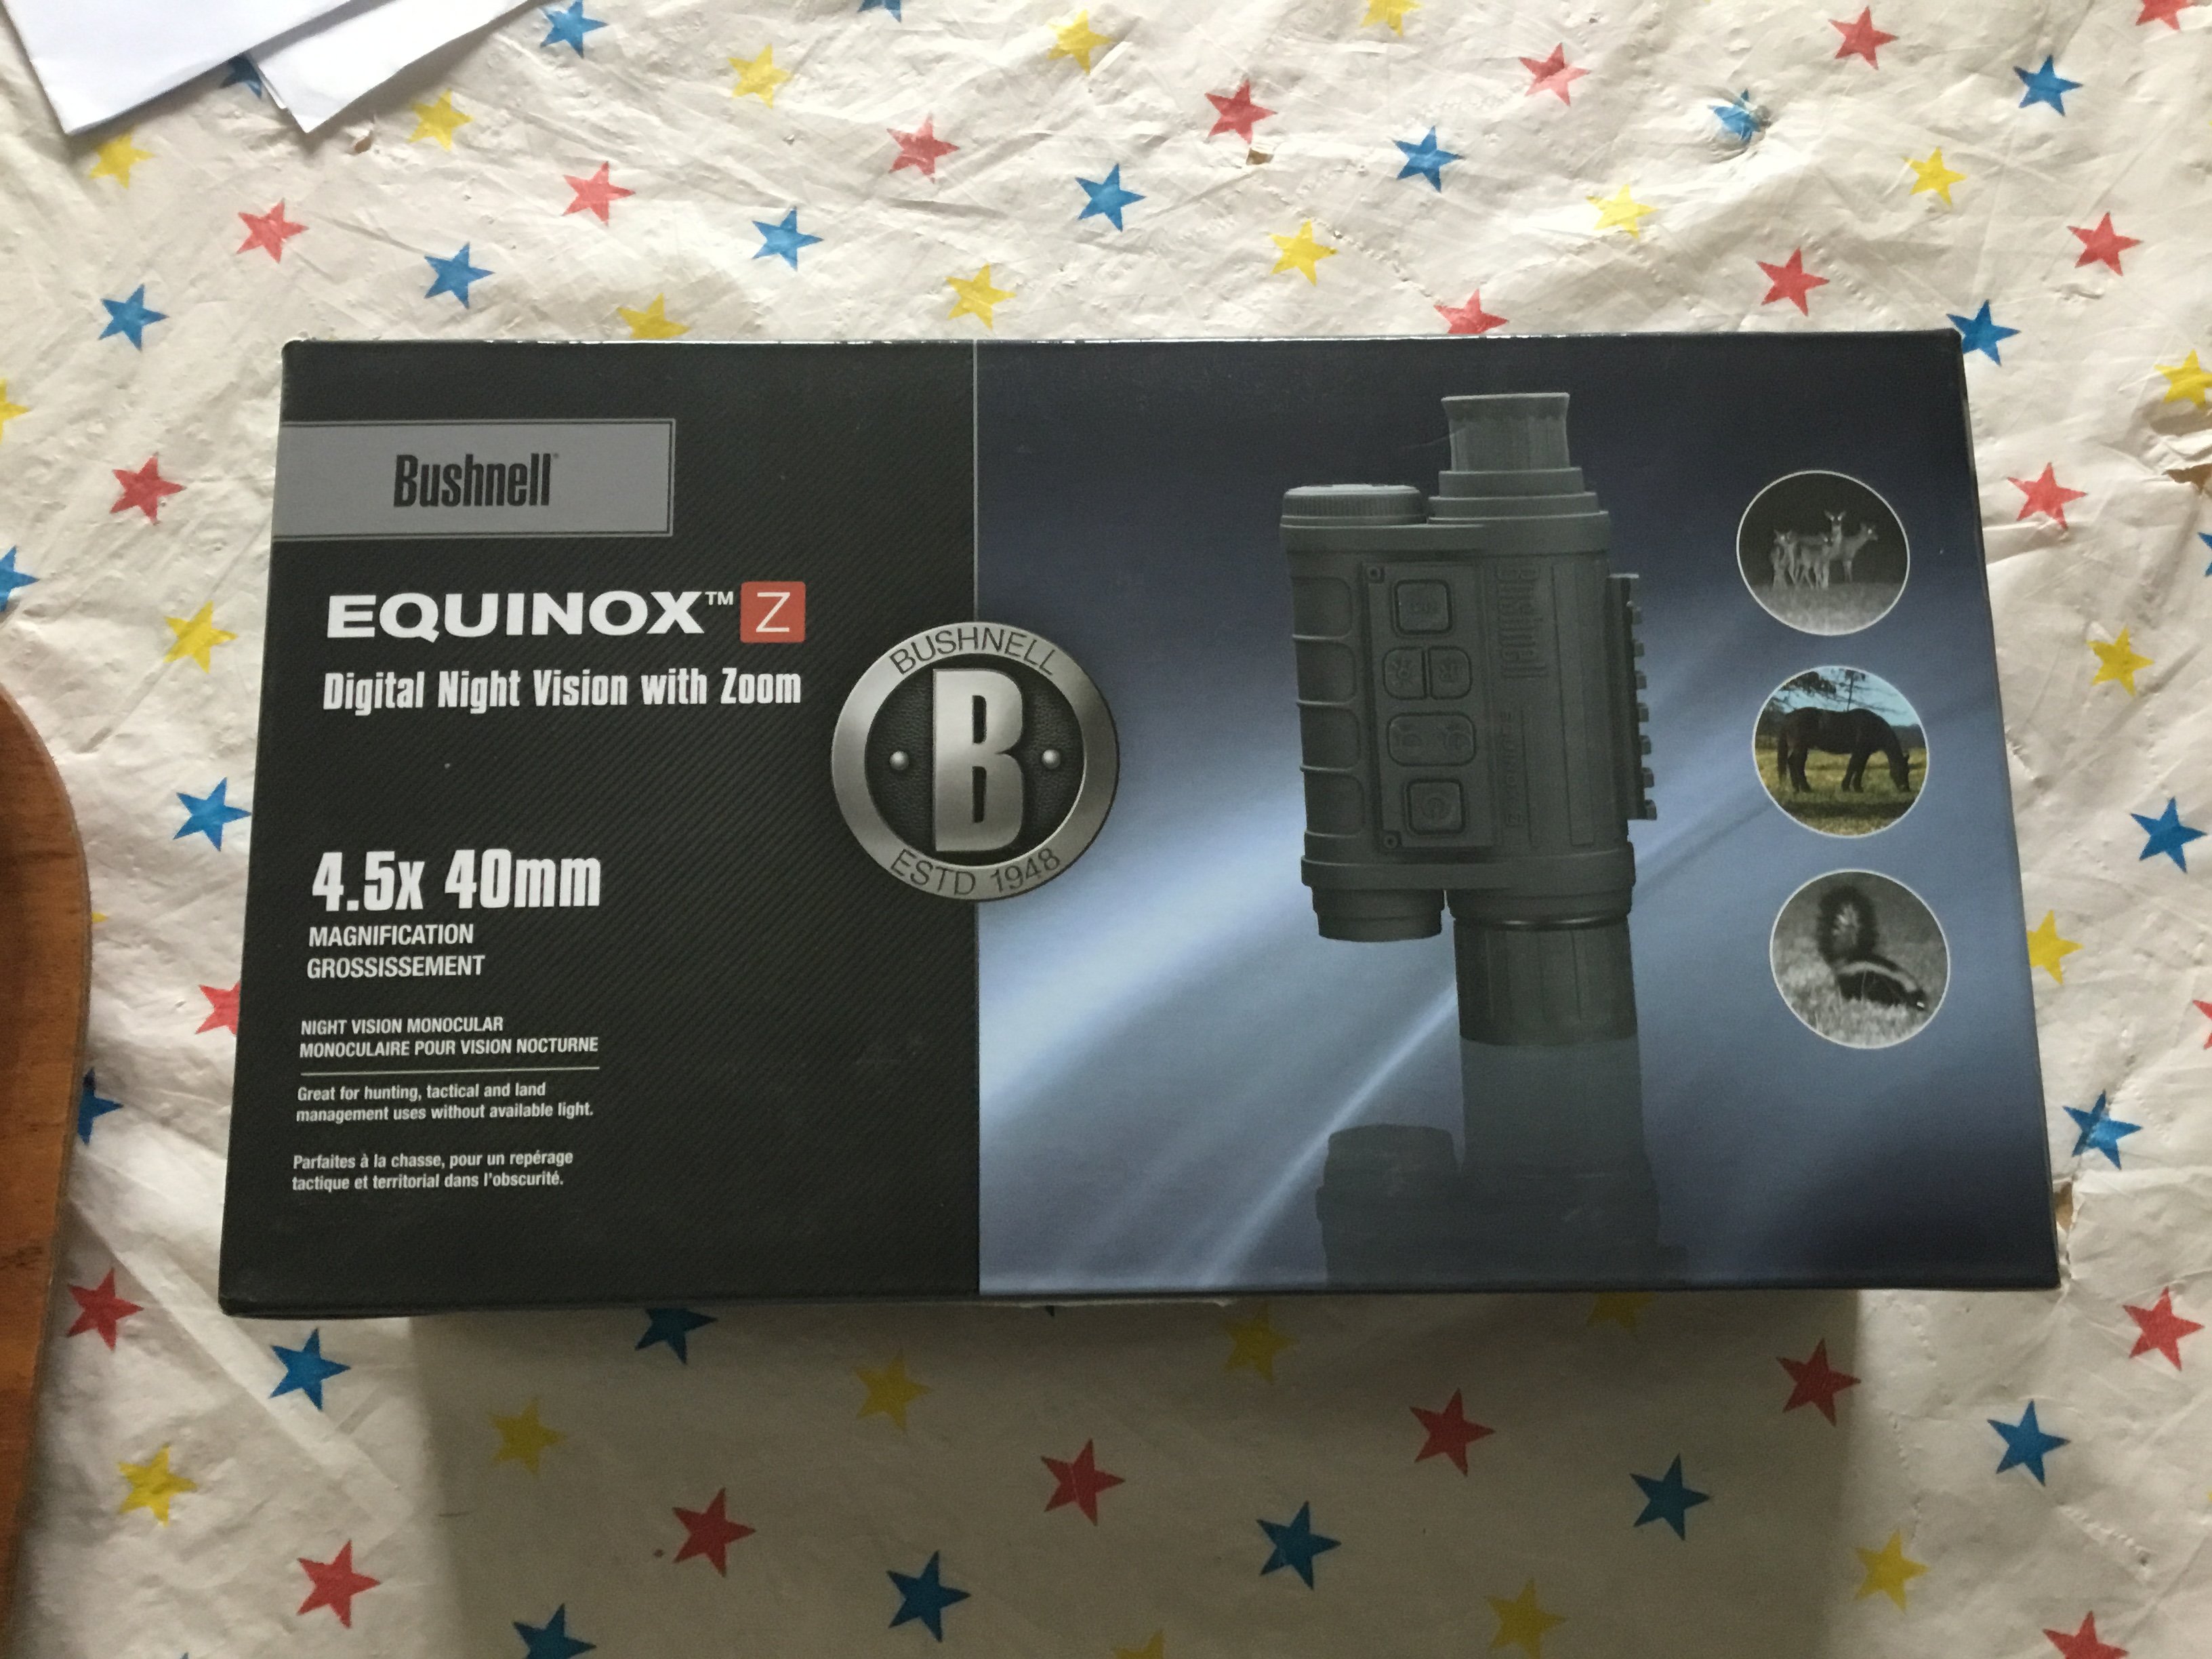 Bushnell equinox z digital night vision monocular 4.5x40 forsale